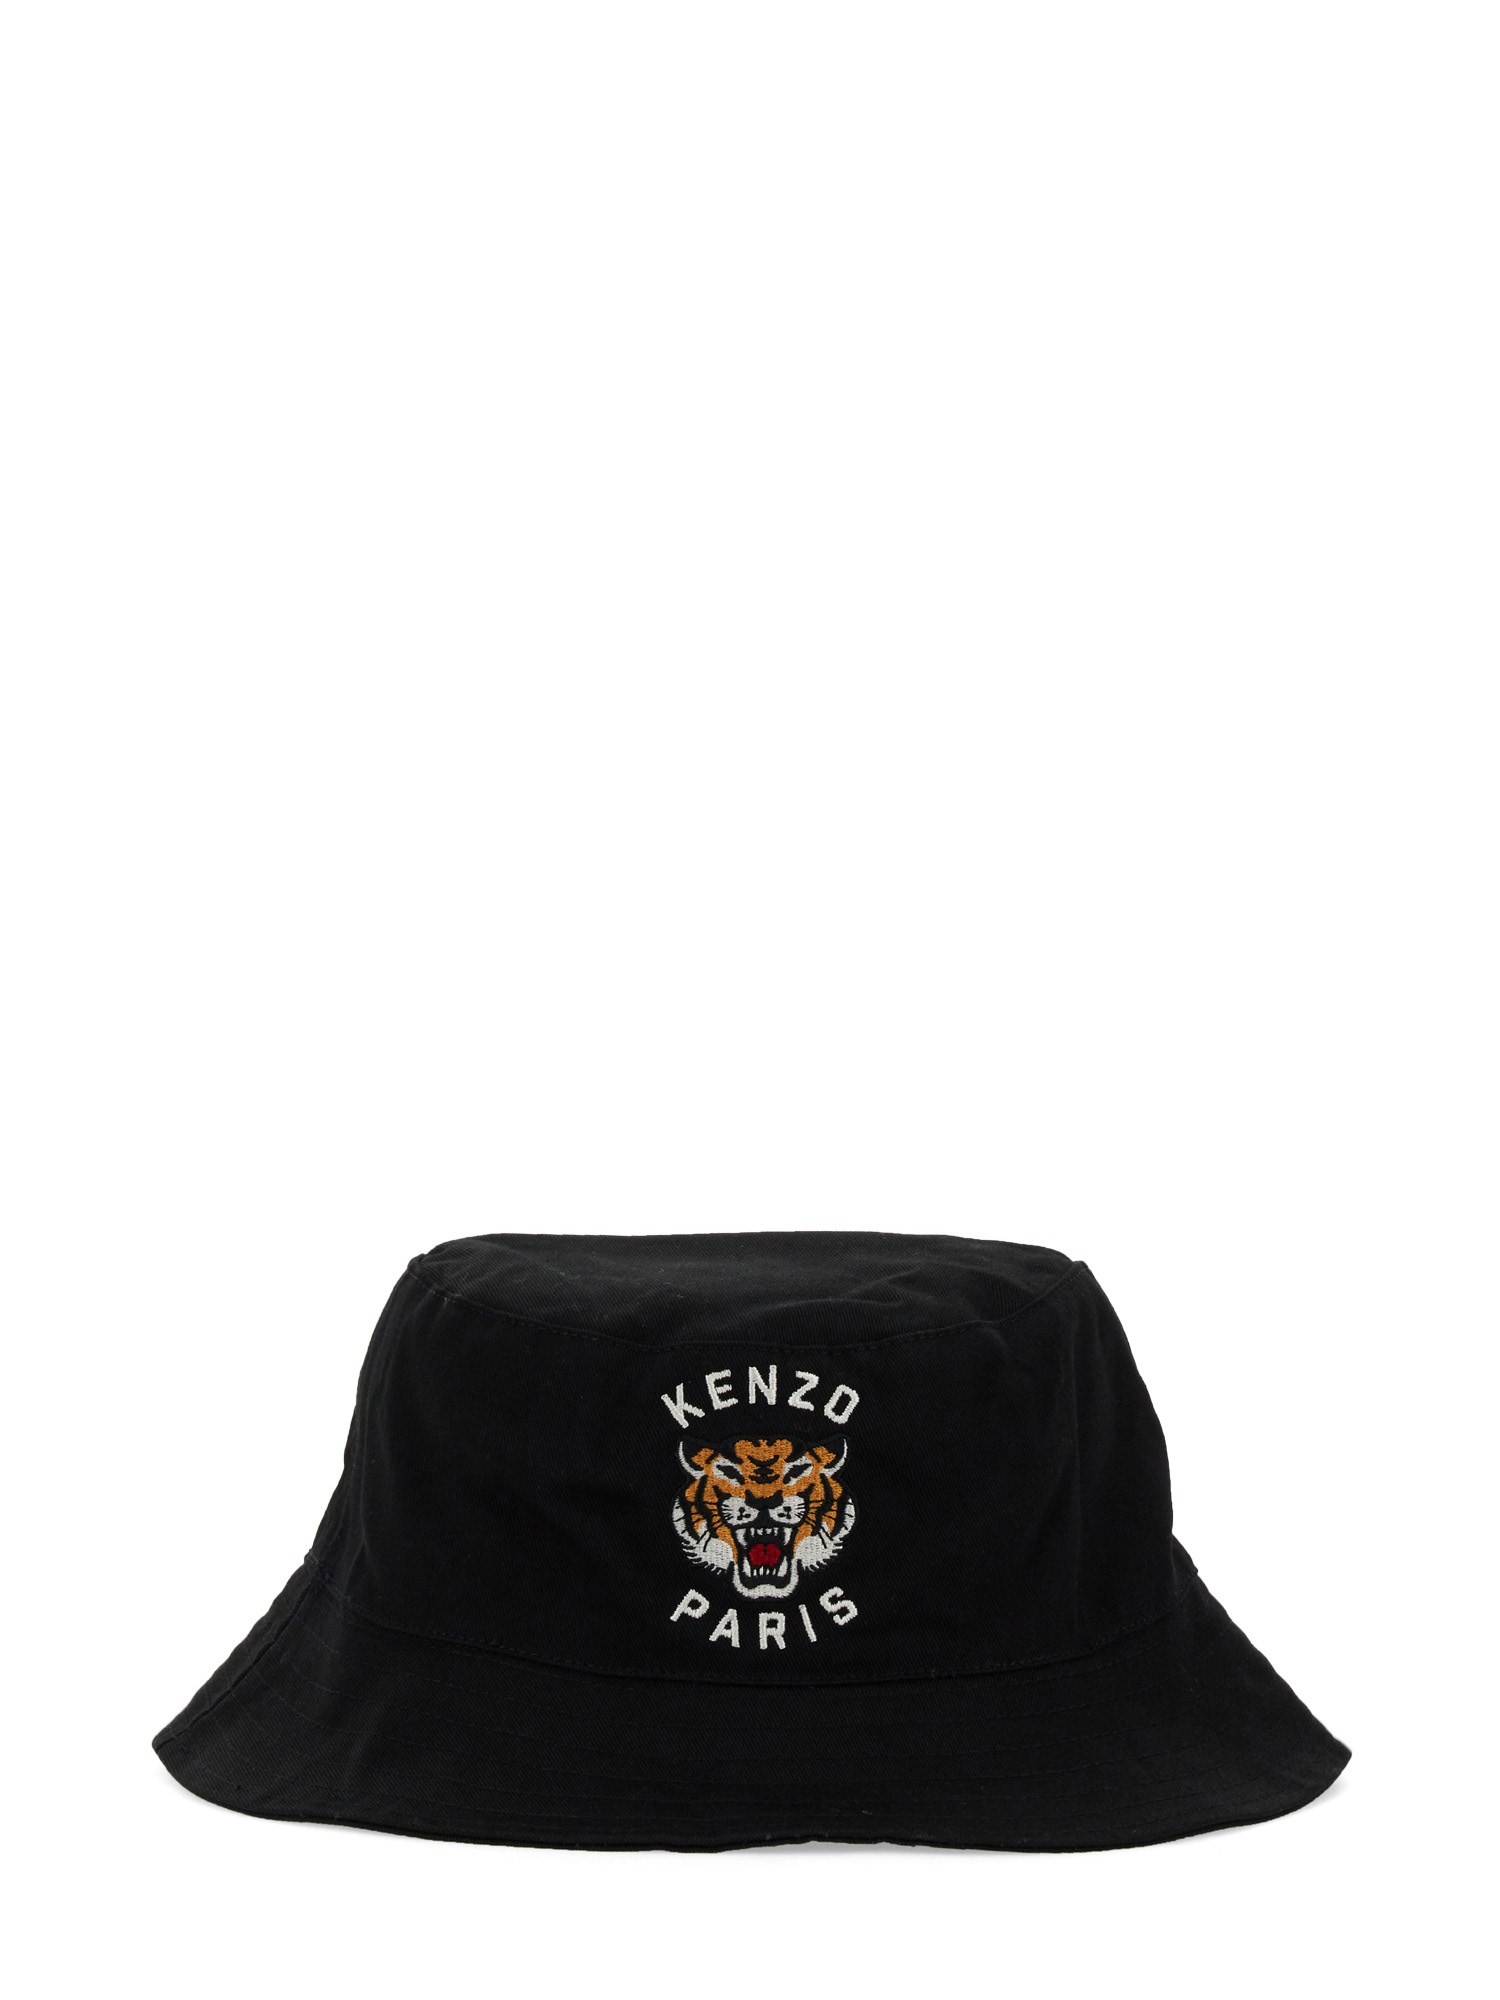 kenzo reversible bucket hat